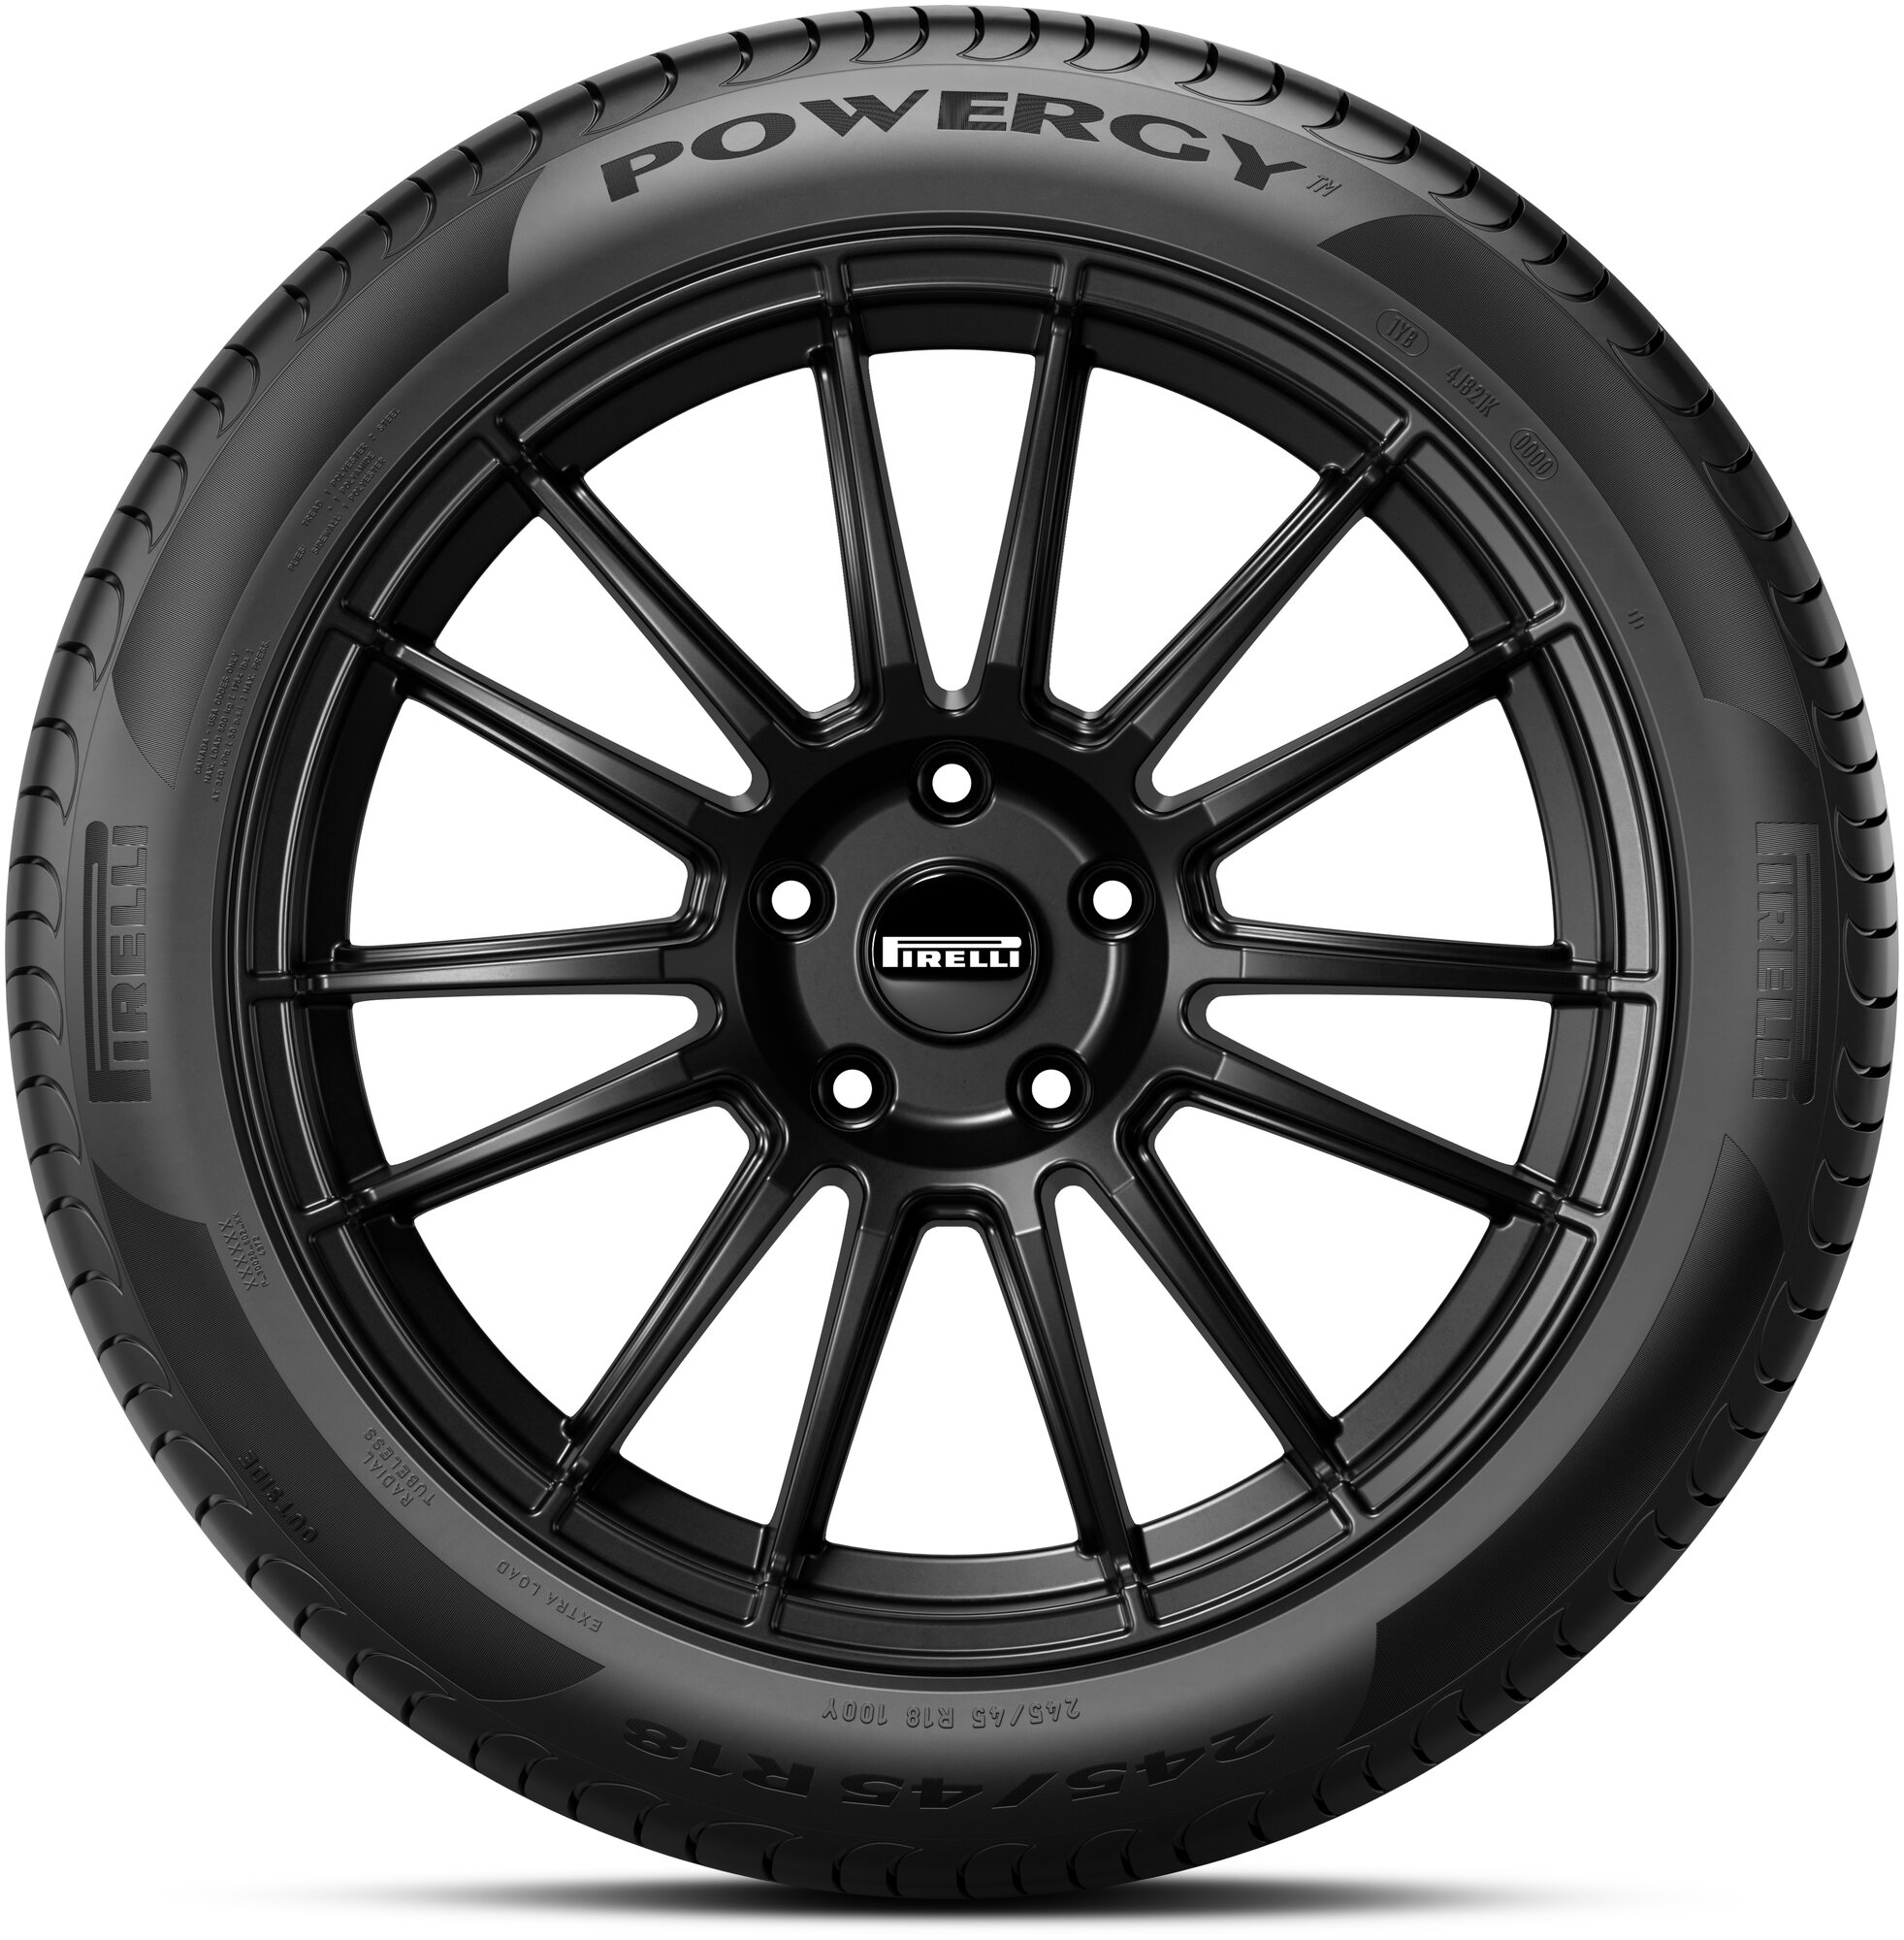 Грузовые шины Continental Pirelli Powergy 215/40 R17 87Y